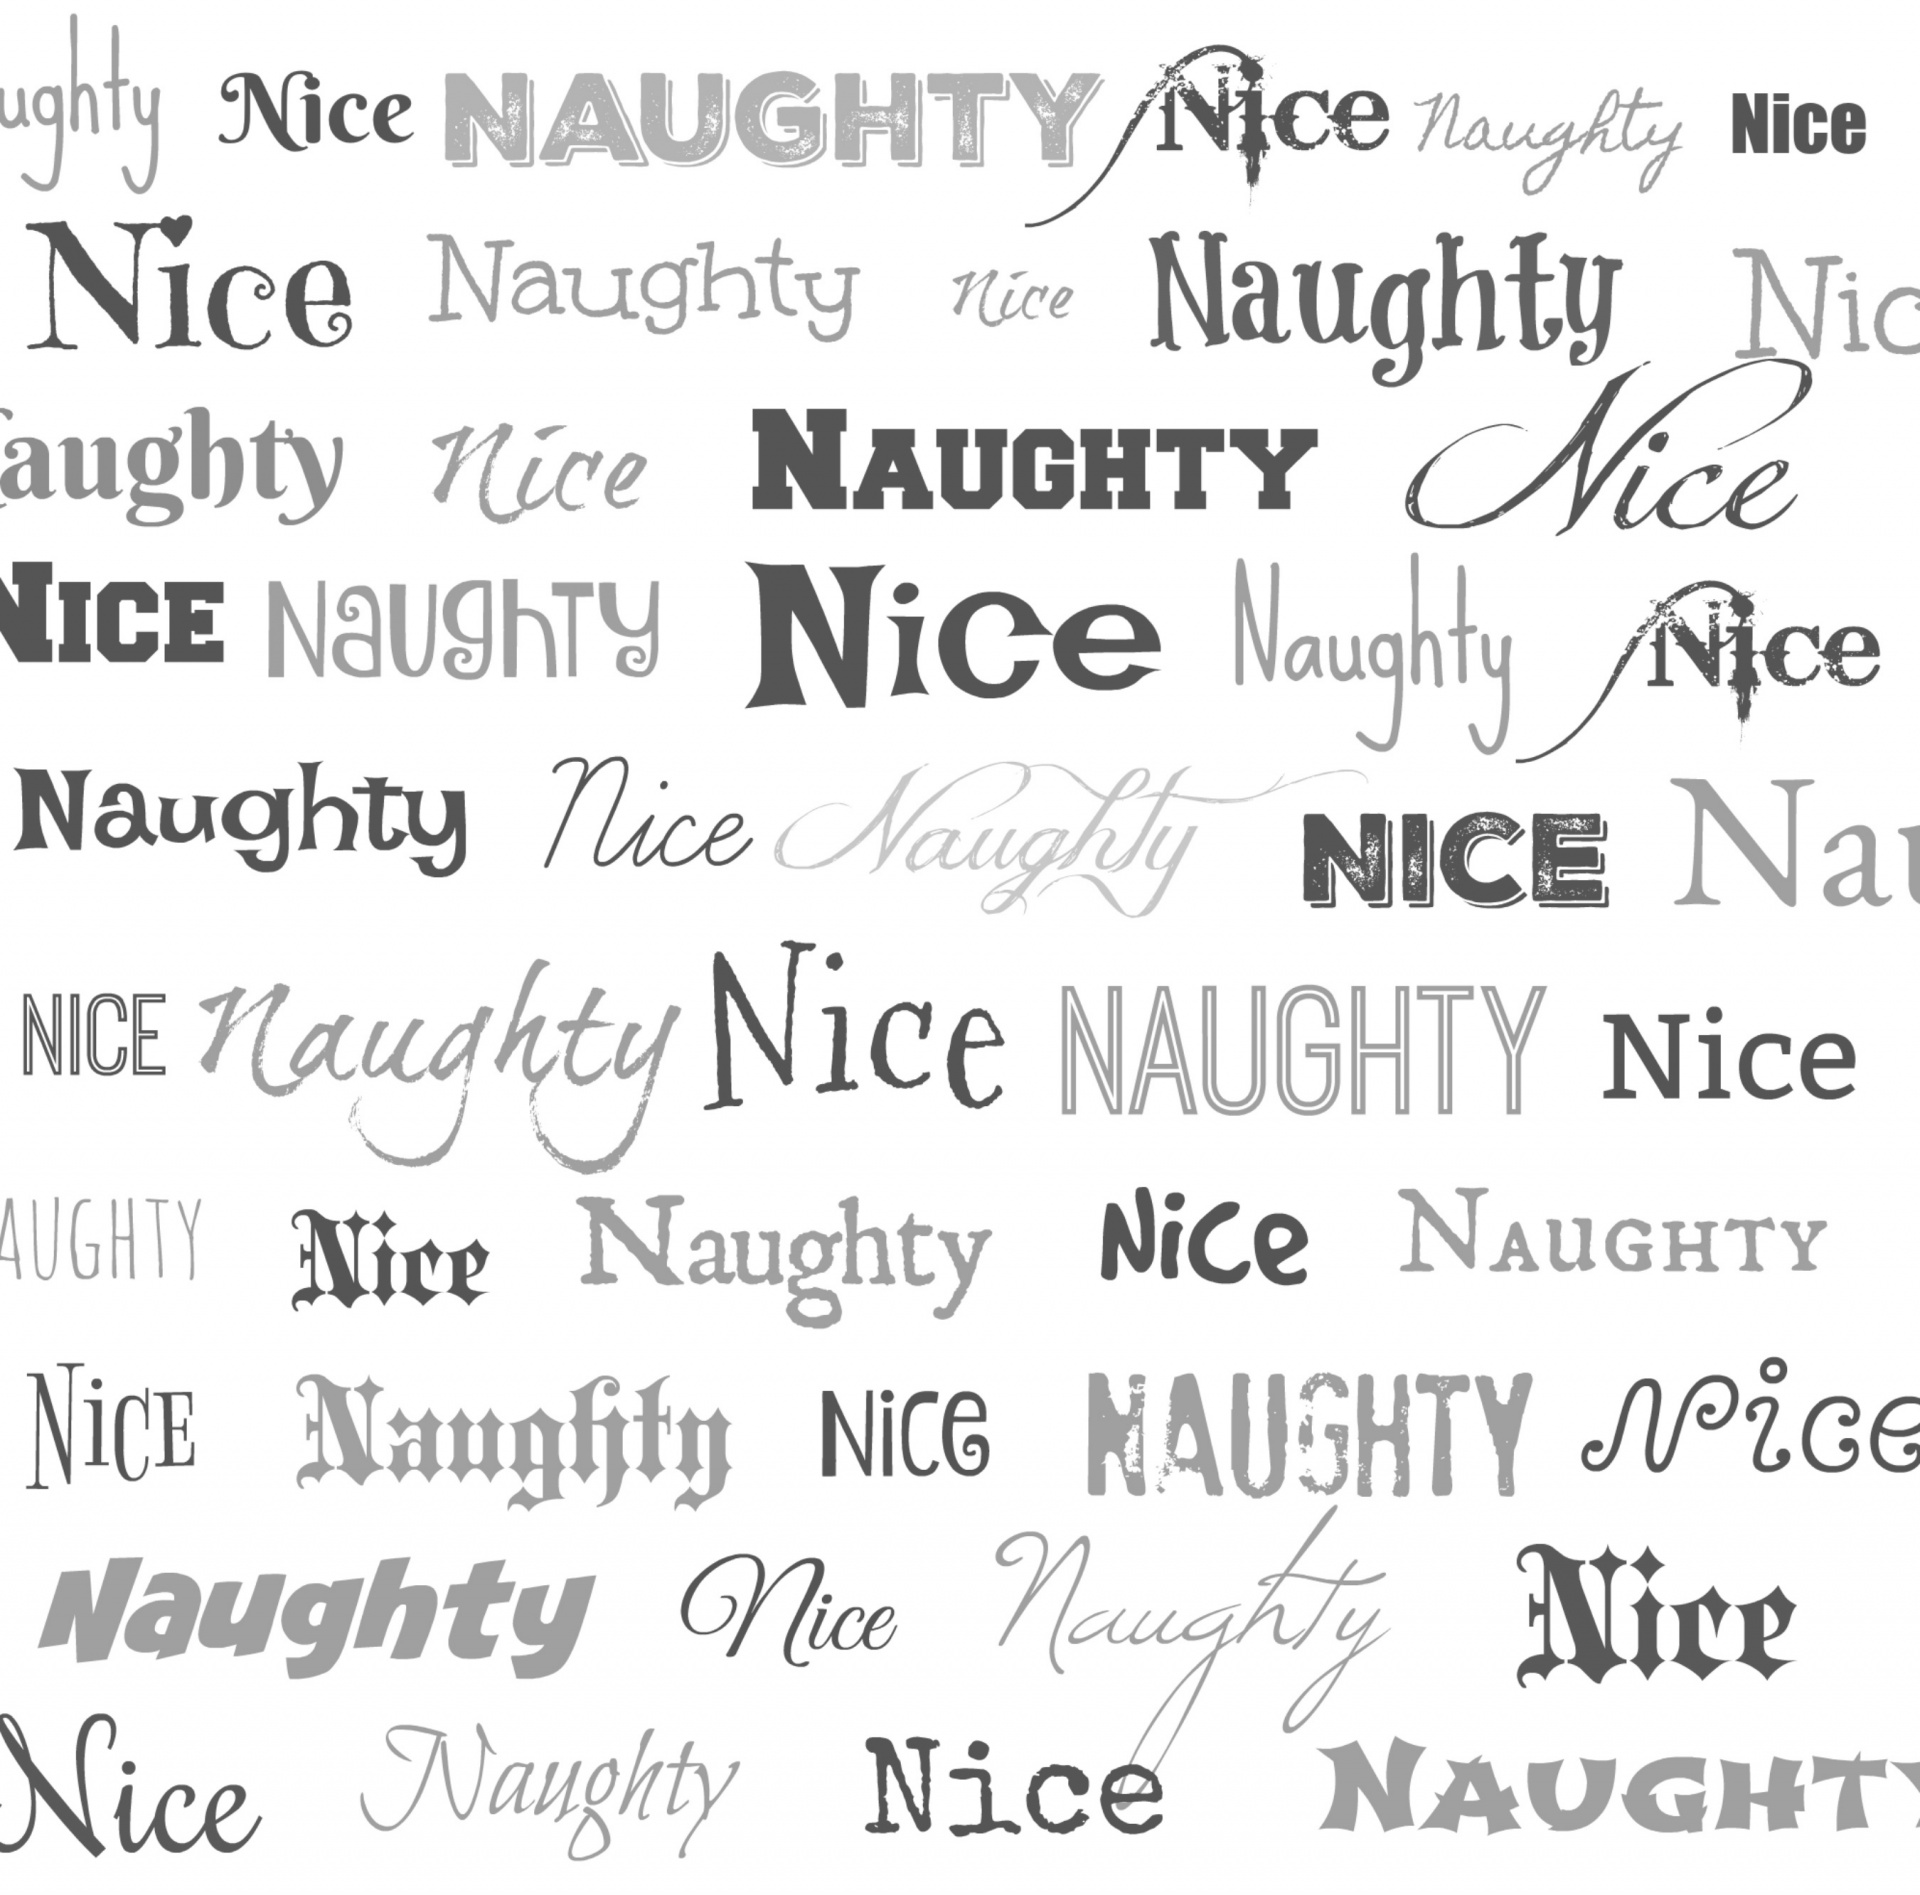 Naughty Or Nice Words